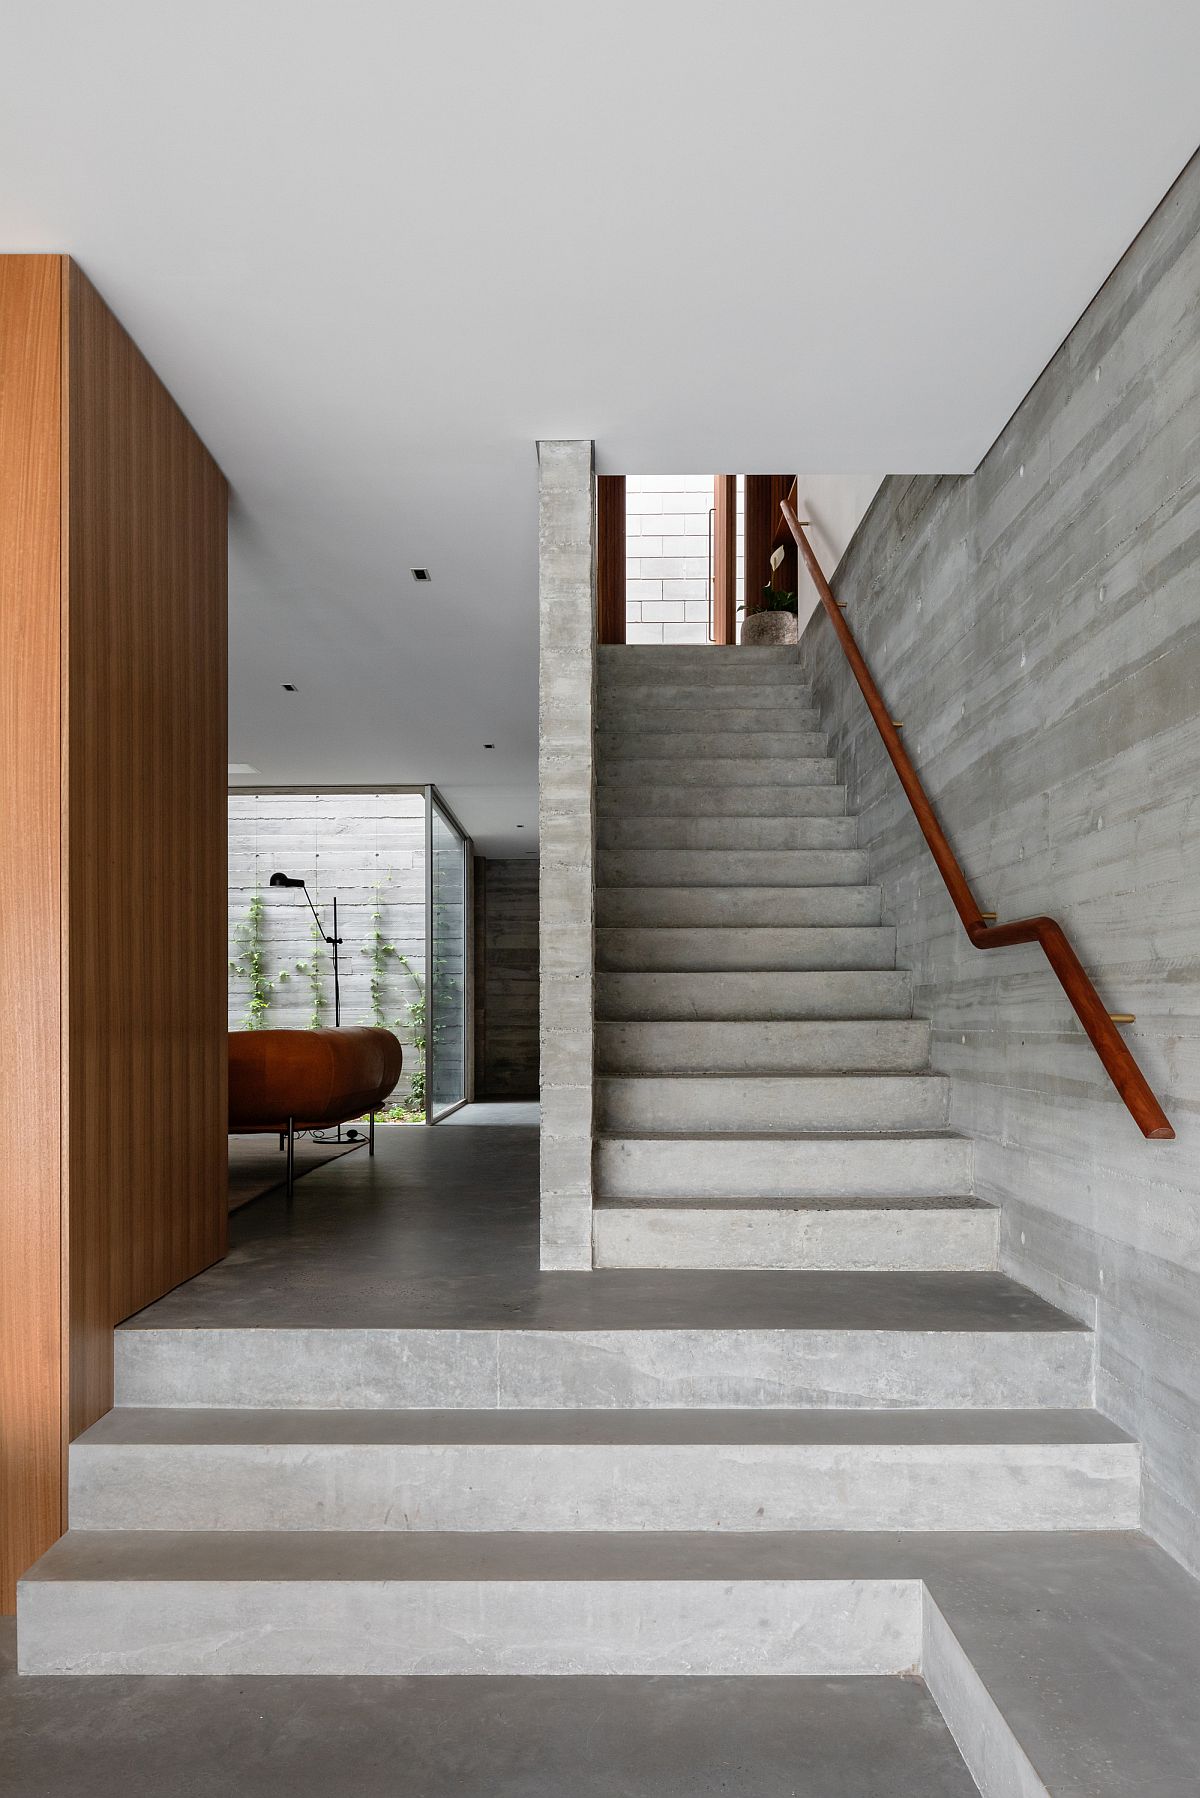 Concrete walls give the interior a minimal gray backdrop